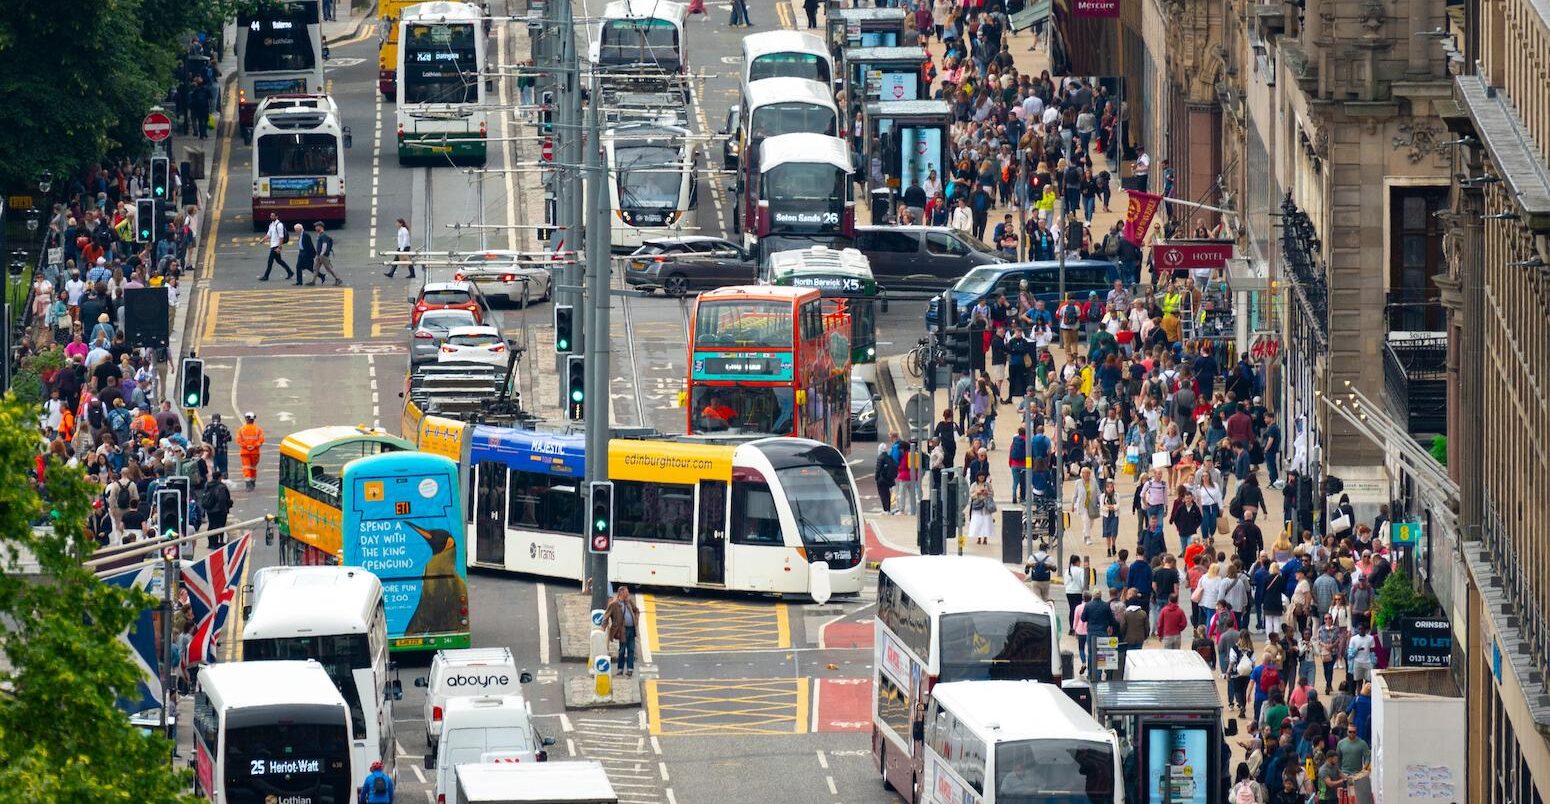 Heavy public transport traffic and pedestrians on Princes Street in Edinburgh, Scotland, UK.